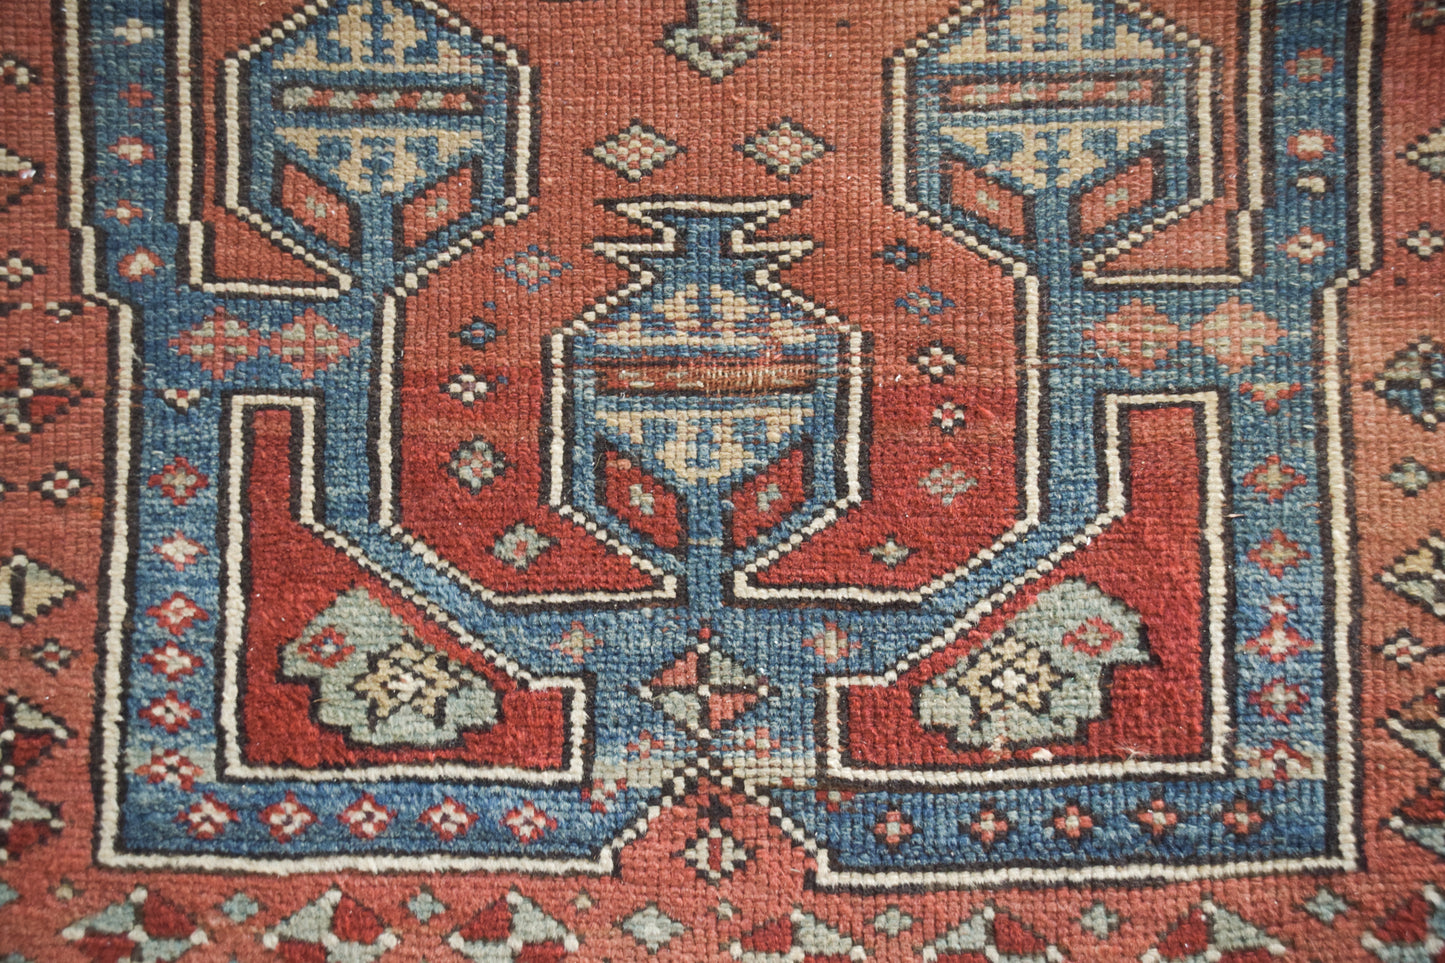 Antique Handmade Kilim-style Rug